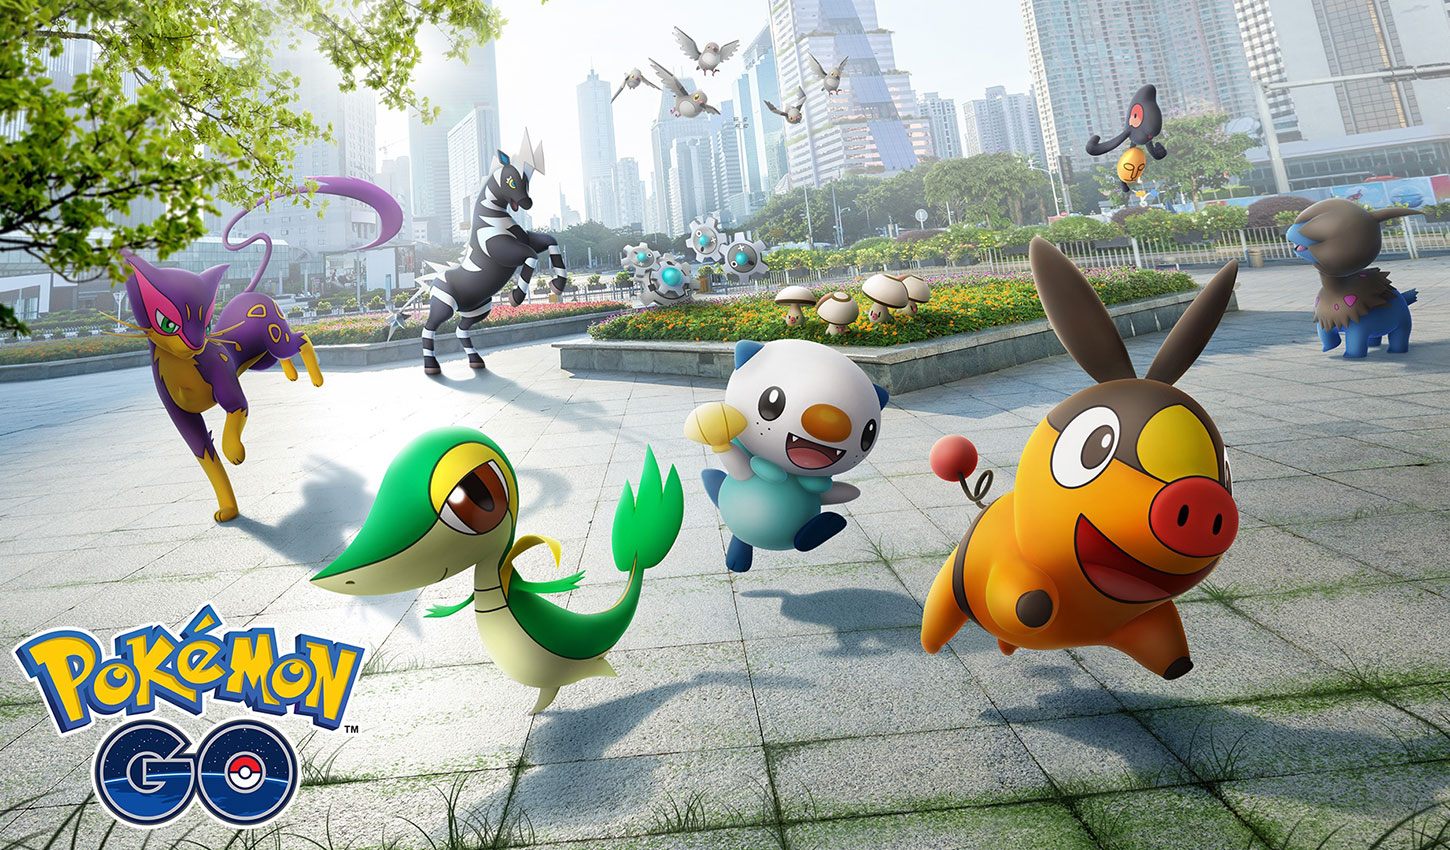 Pokémon GO Catches $5 Billion in Lifetime Revenue in Five Years main image feature